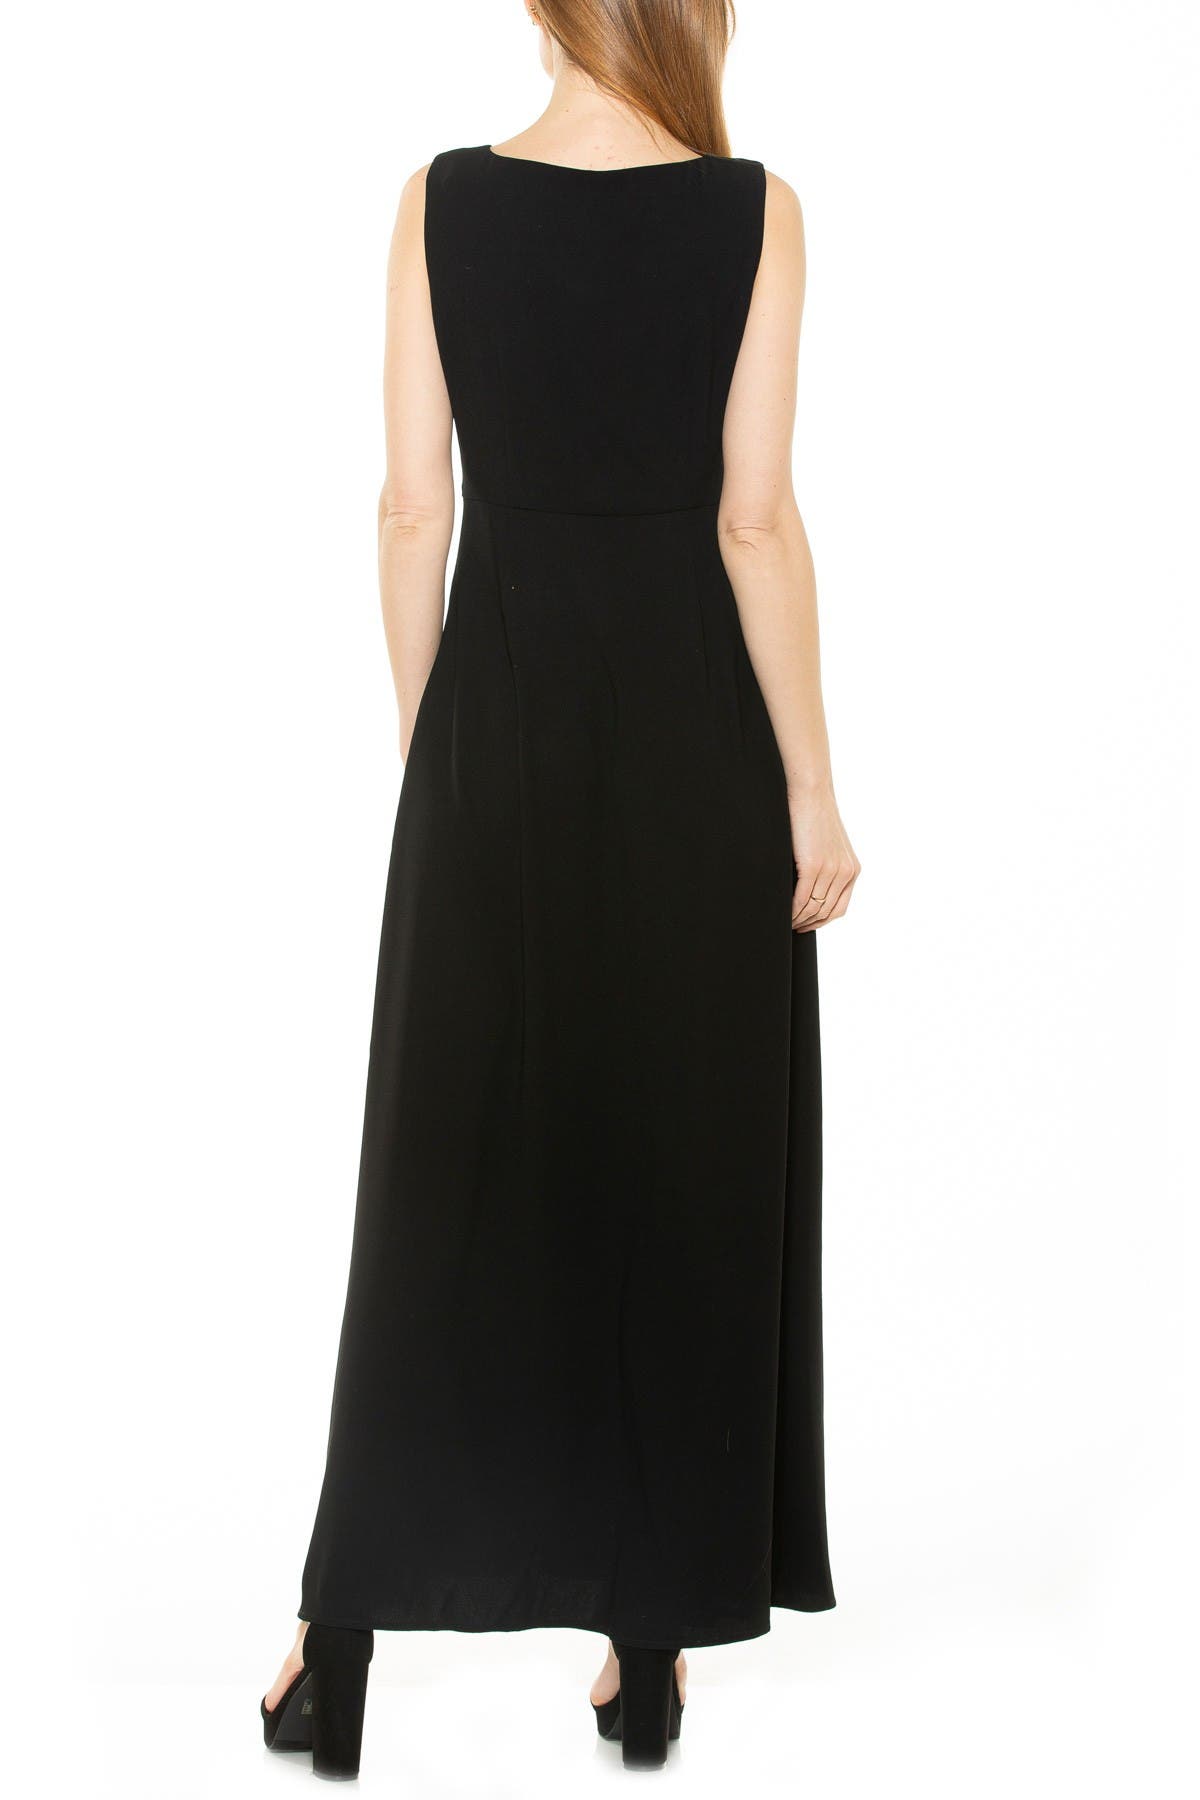 Alexia Admor Milana Button Front Sleeveless Maxi Dress In Black